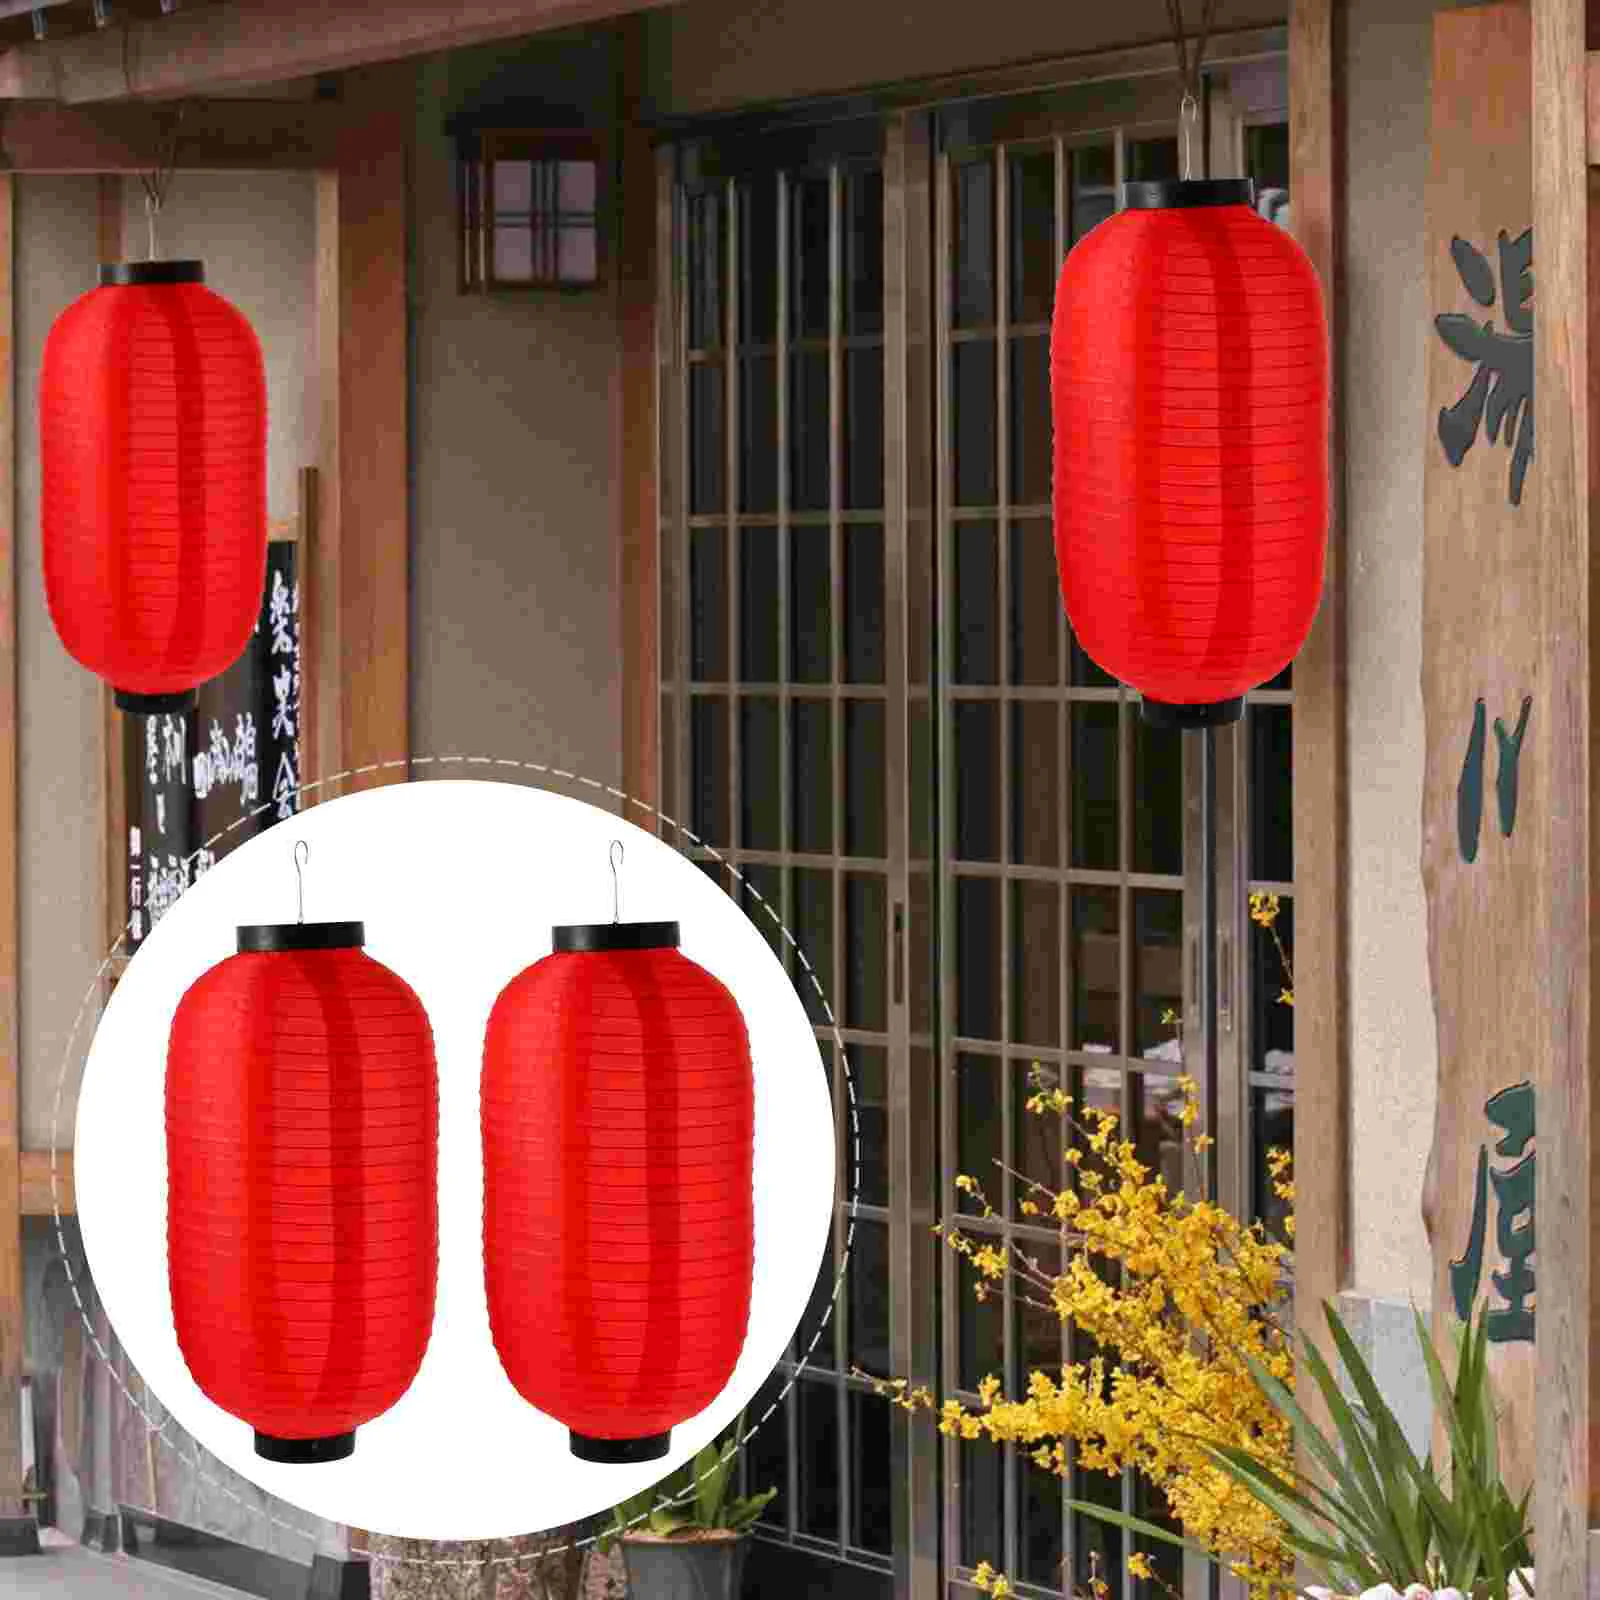 

2pcs chinese hanging lanterns decorative red traditional hanging lanterns china new year spring festival decoration cloth